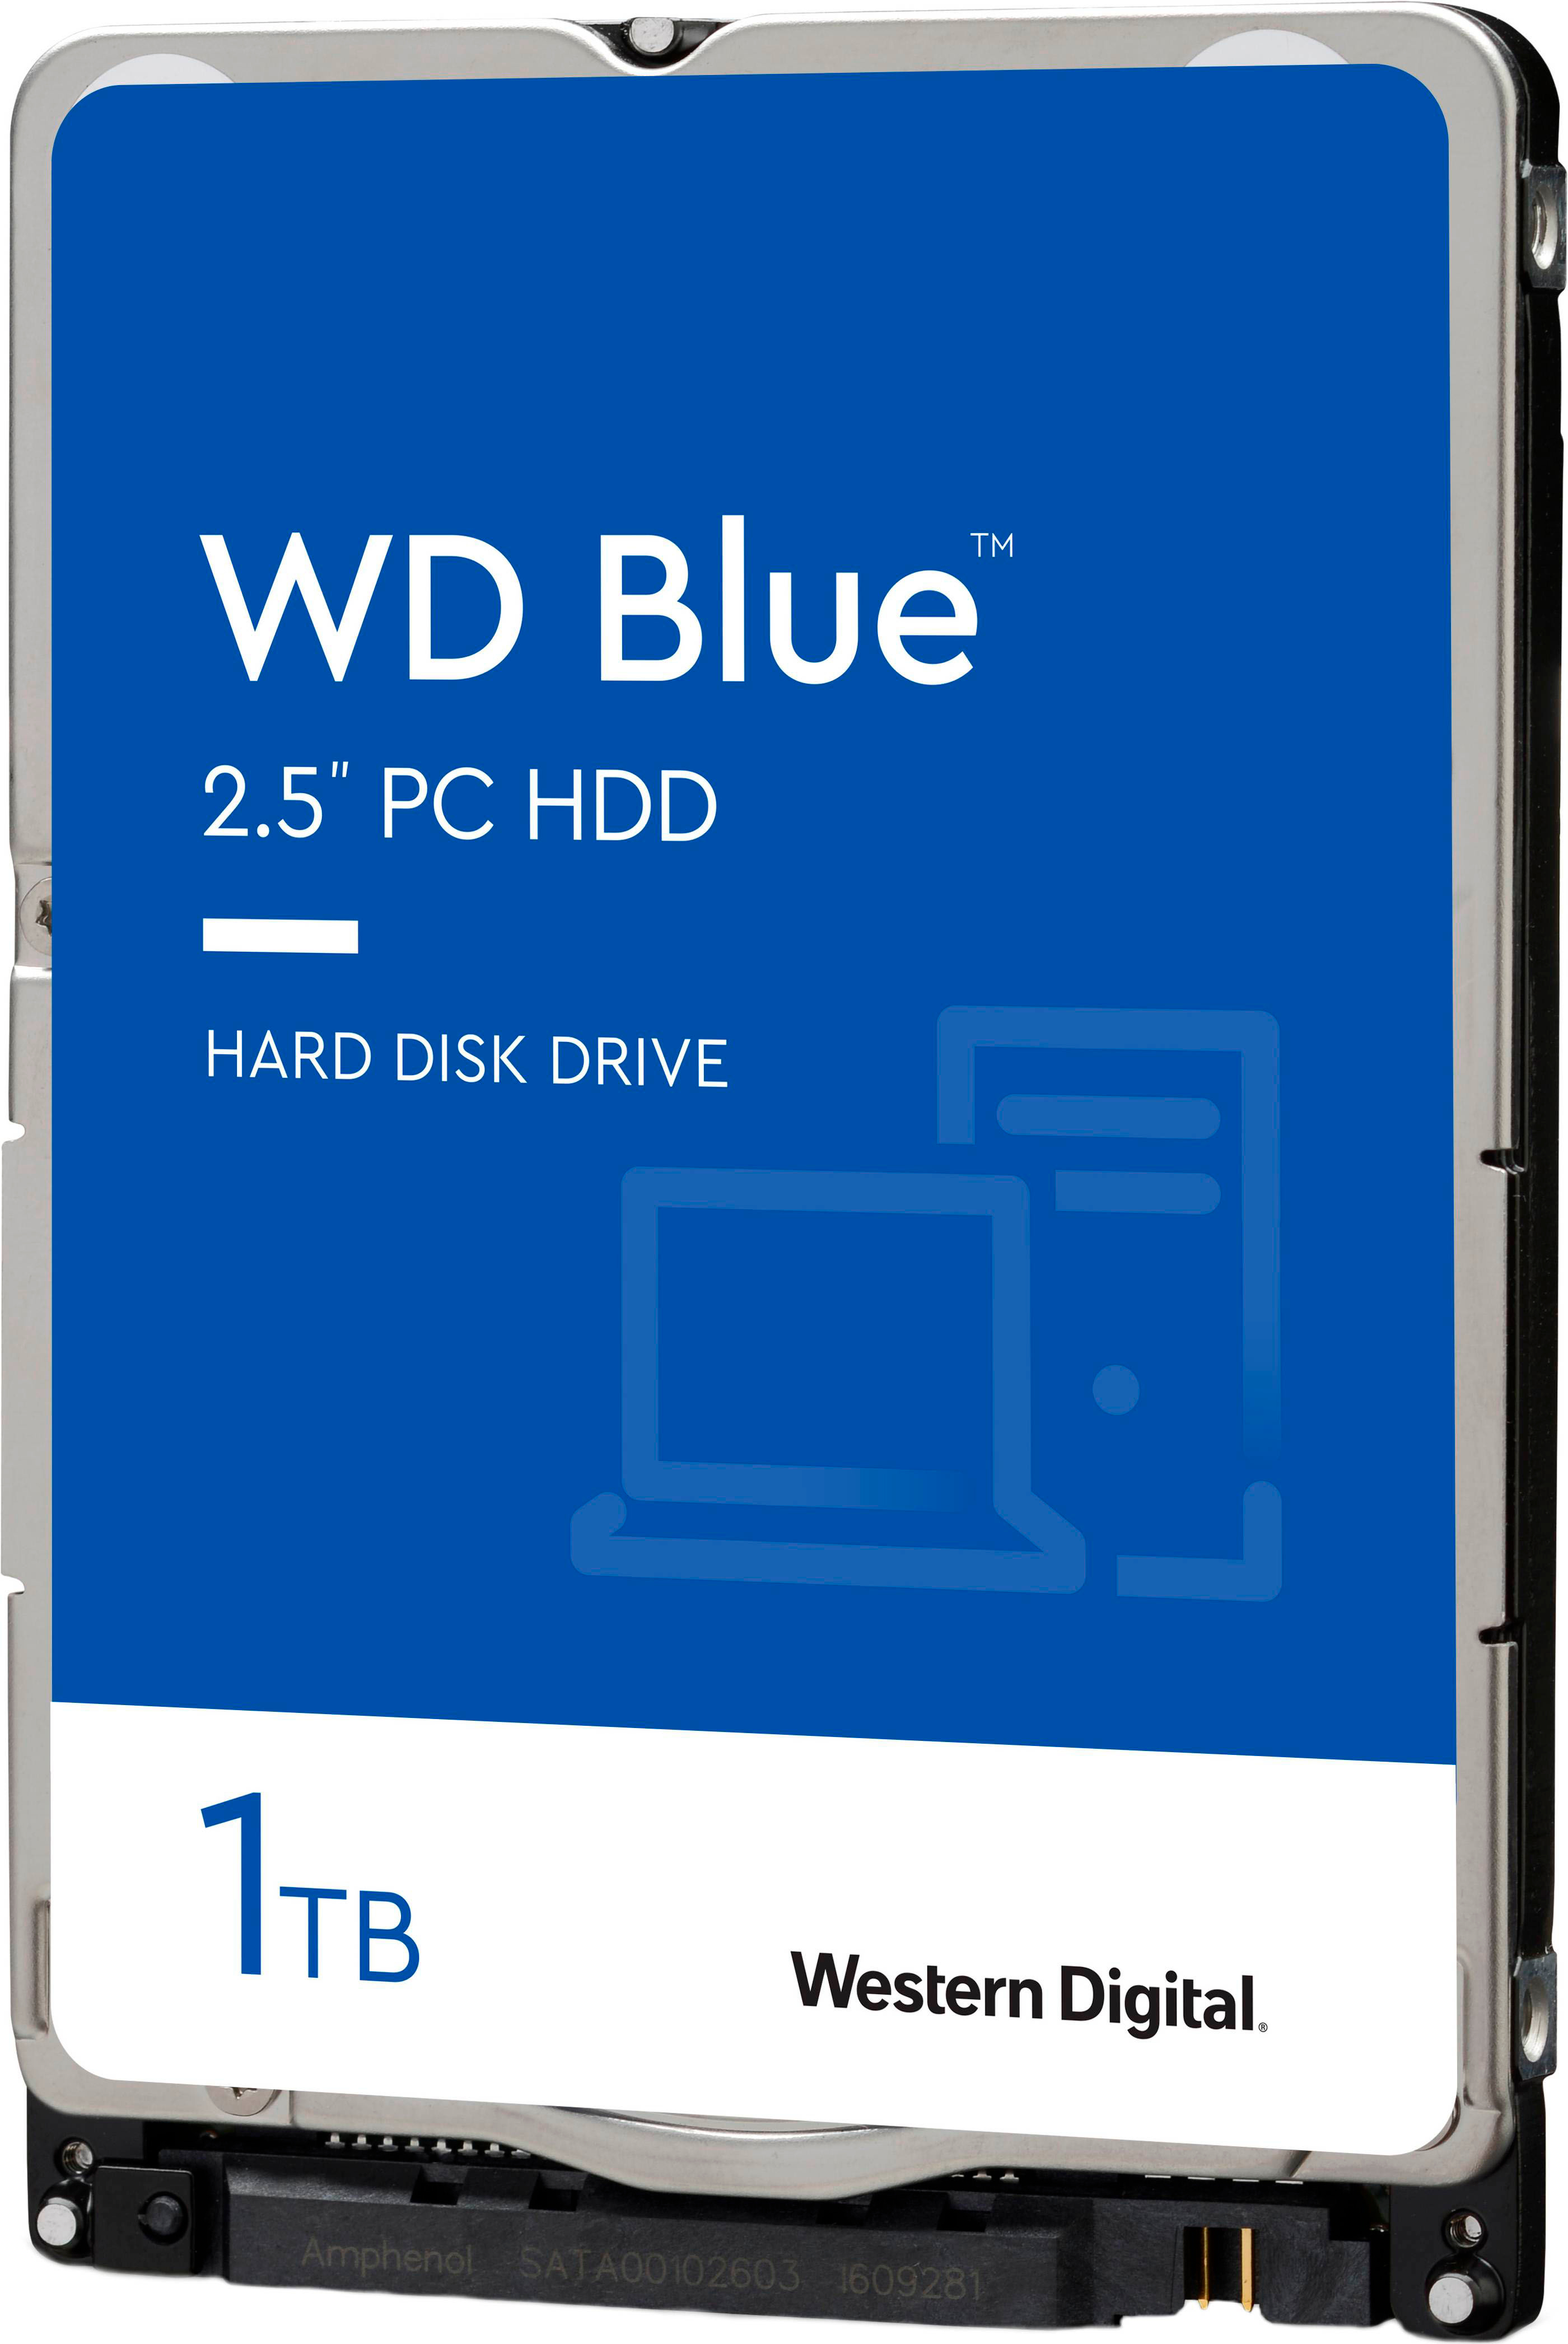 WD Blue 1TB Internal SATA Hard Drive for Laptops Buy